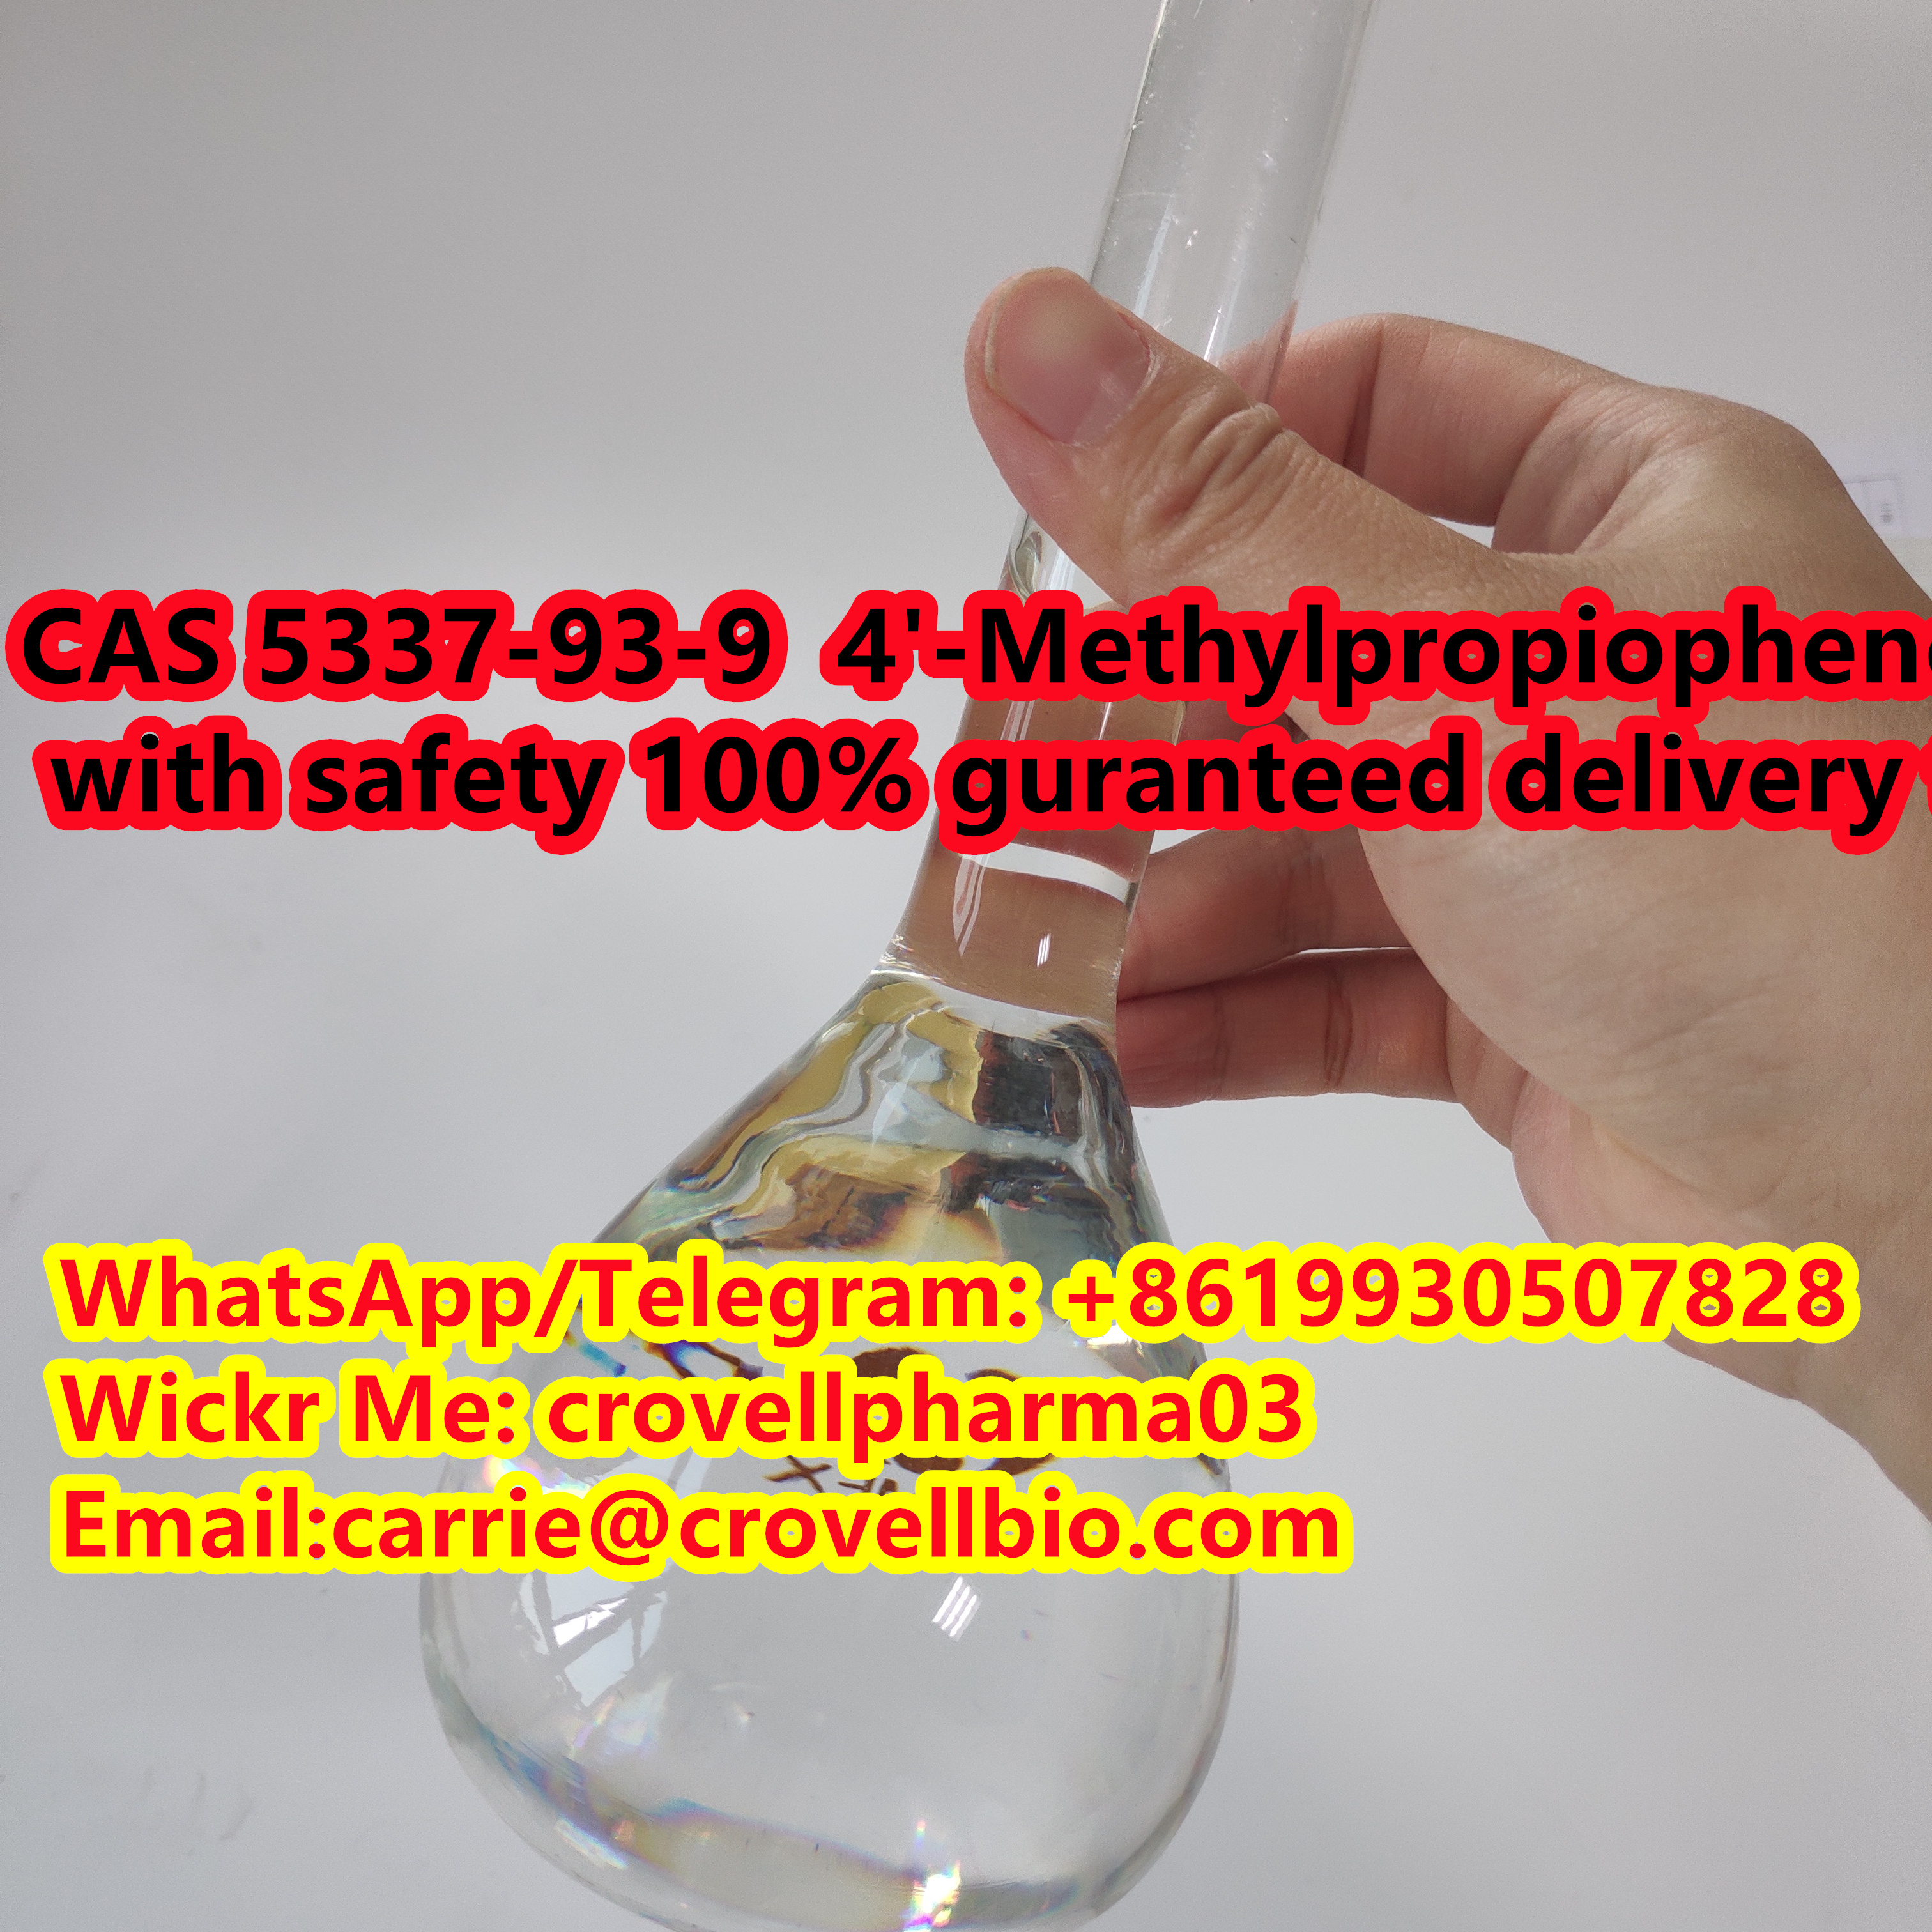 CAS 5337-93-9 4'-Methylpropiophenone WhatsApp/Telegram: 